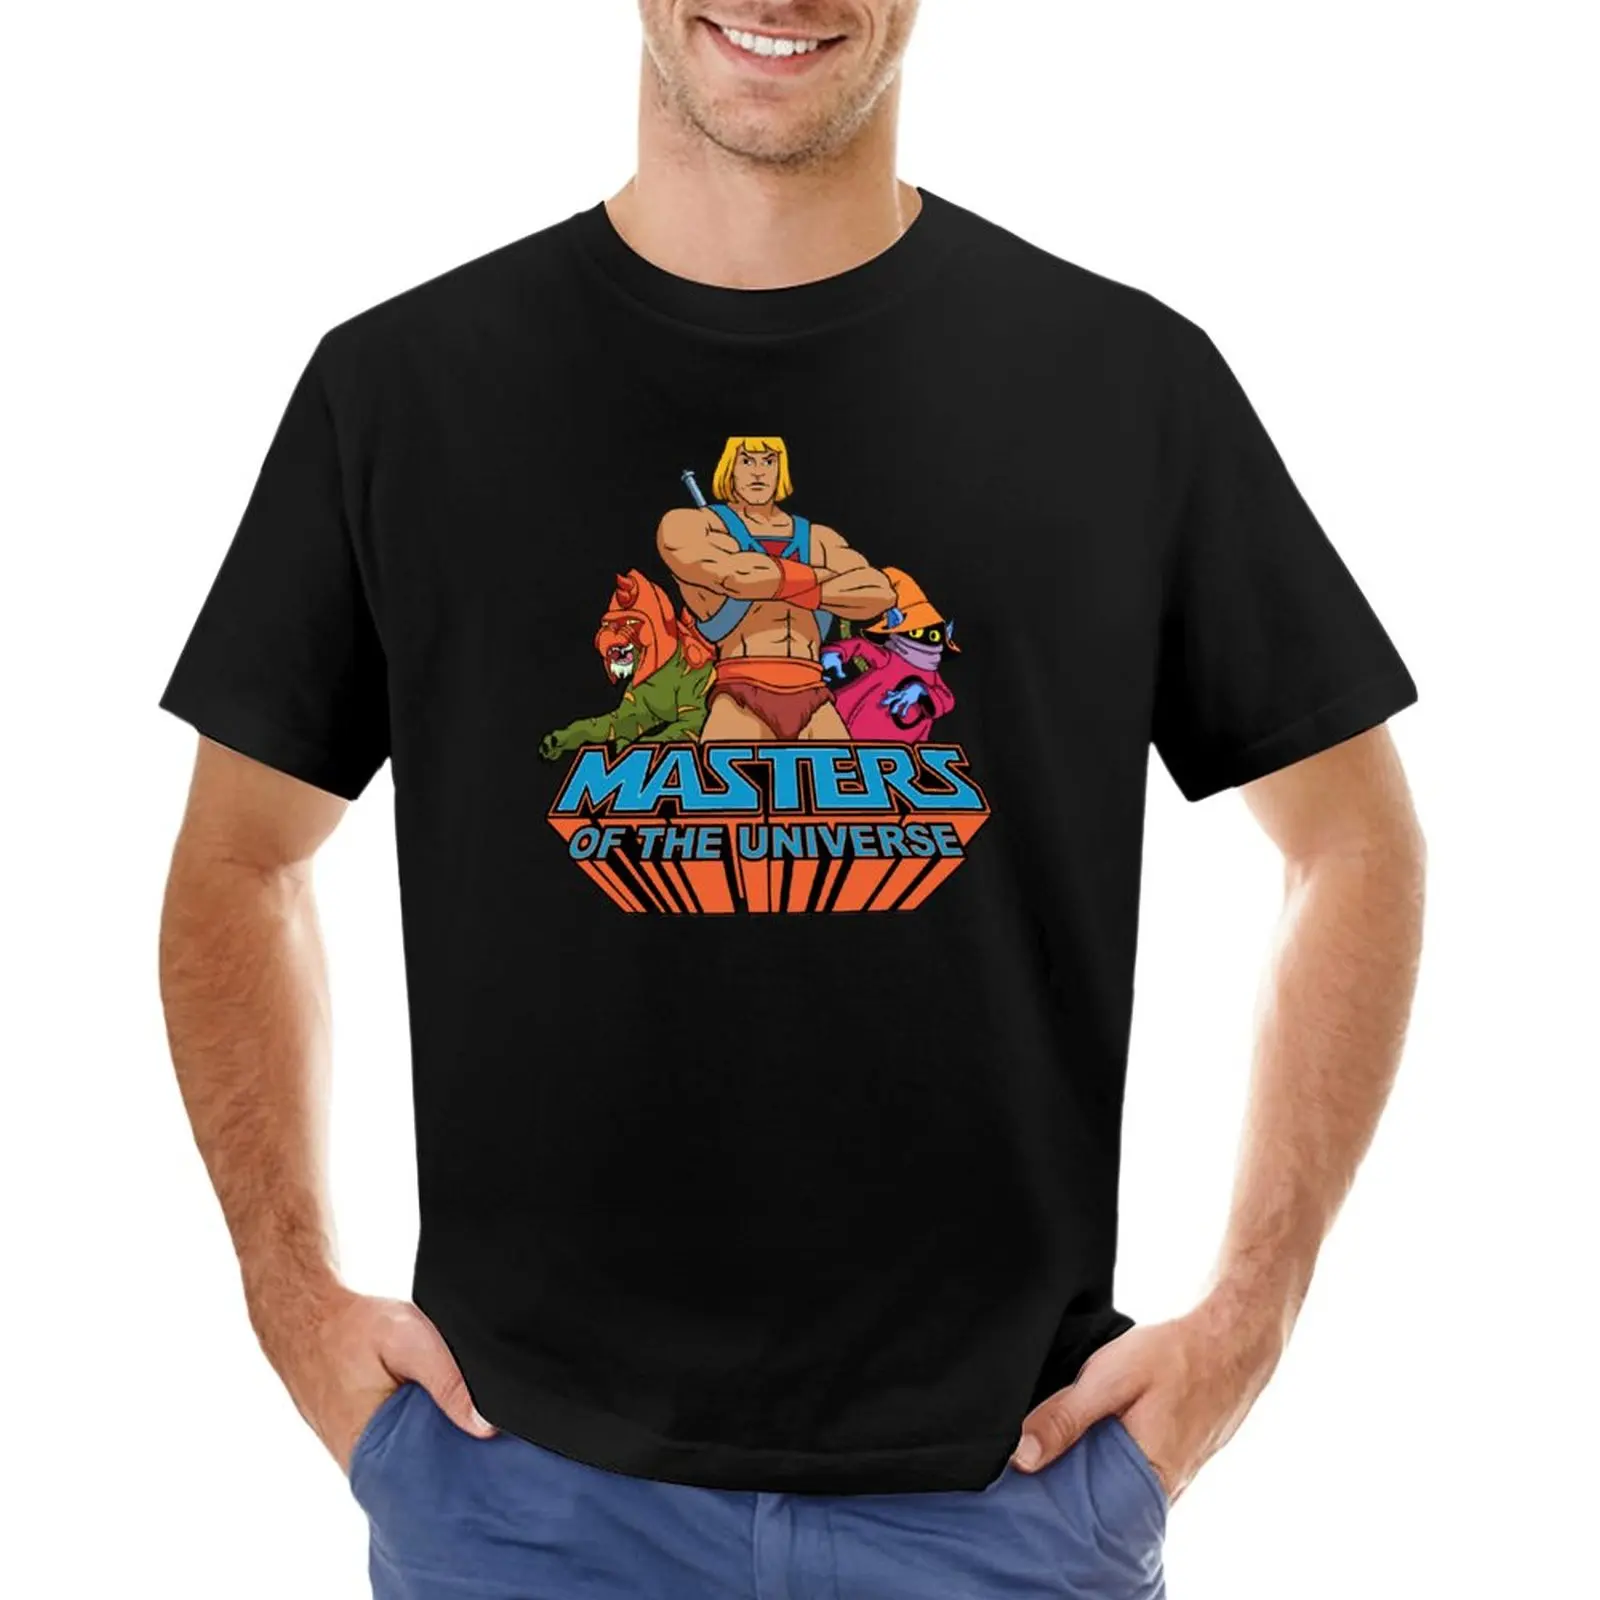 

He-Man T-Shirt boys whites blacks hippie clothes heavyweight t shirts for men